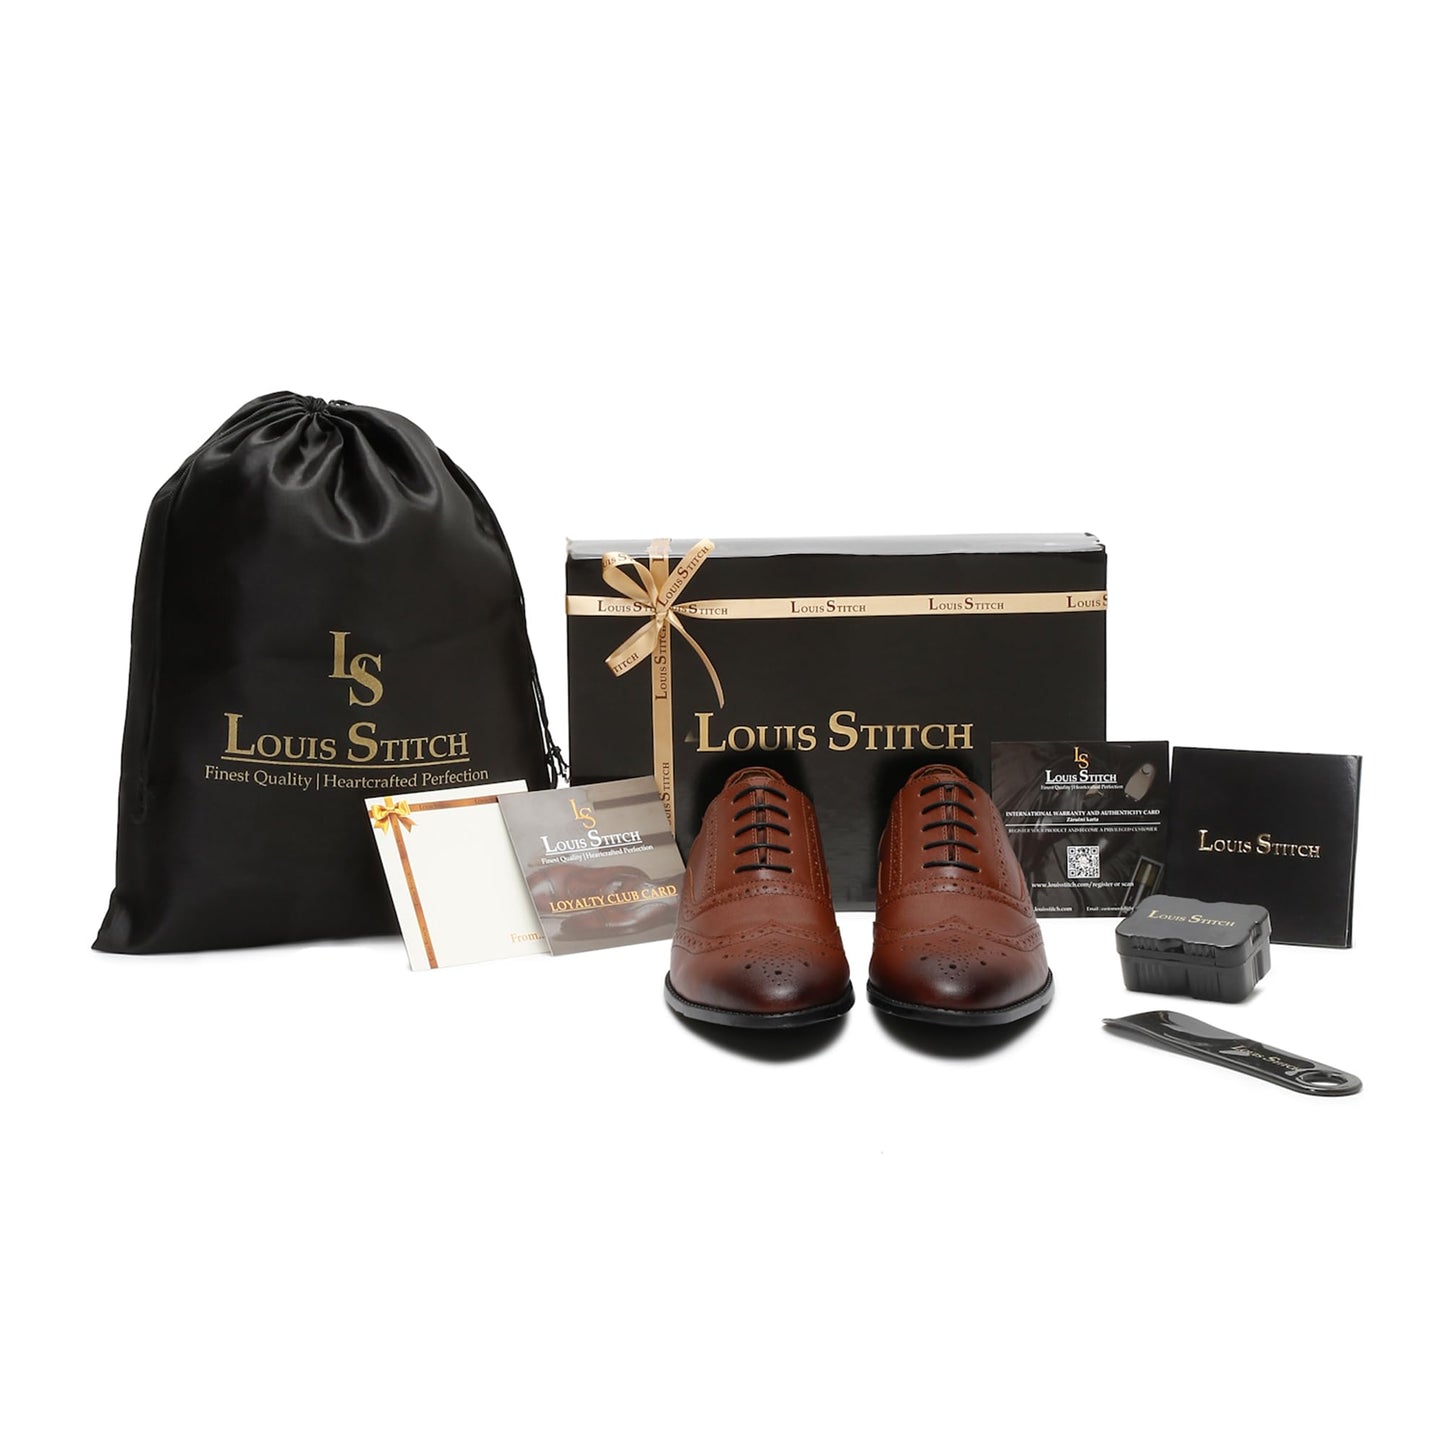 LOUIS STITCH Men's American Tan Wingtip Brogue Style Comfortable Formal Shoes Lace Up Shoe for Men (RGBG-) (Size- 11 UK)